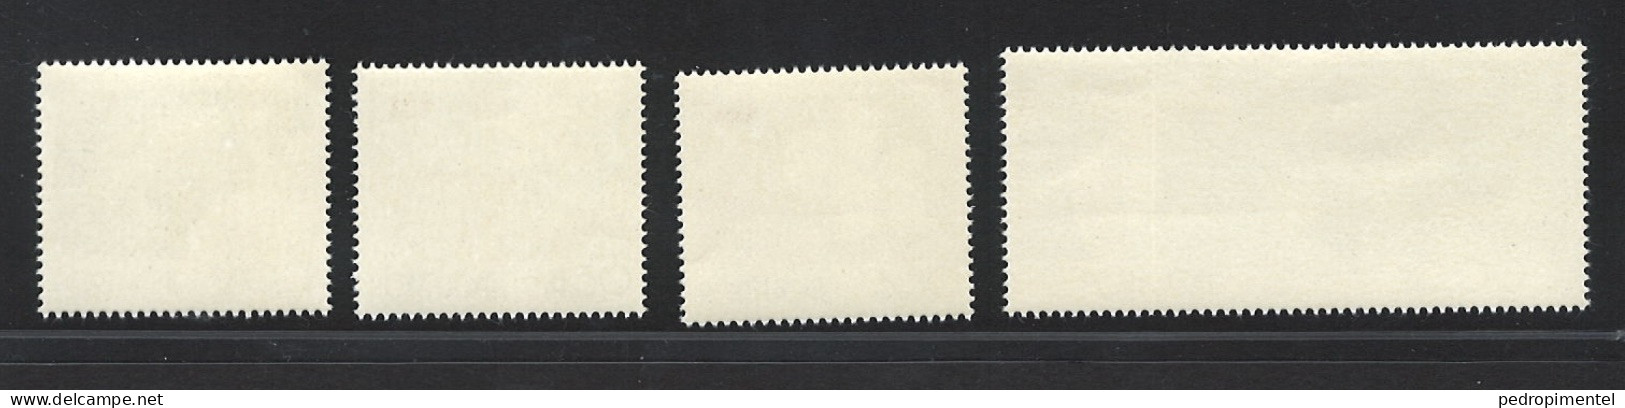 Portugal Stamps 1975 "International Astronautical Federation" Condition MNH #1261-1264 - Ongebruikt